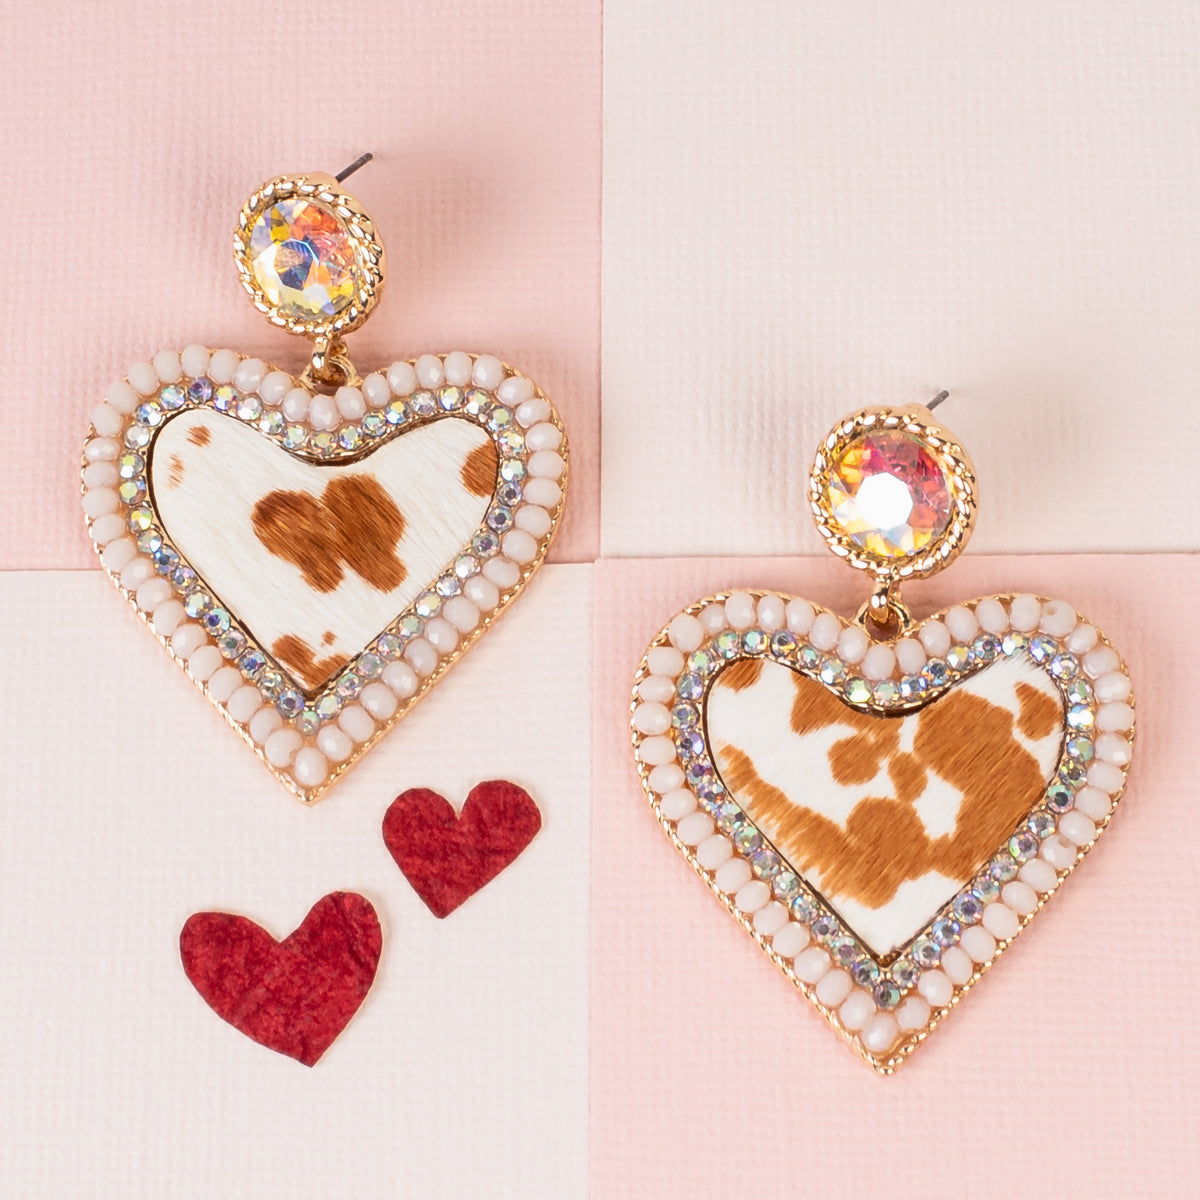 93164 - Animal Print Heart Earrings - Beige